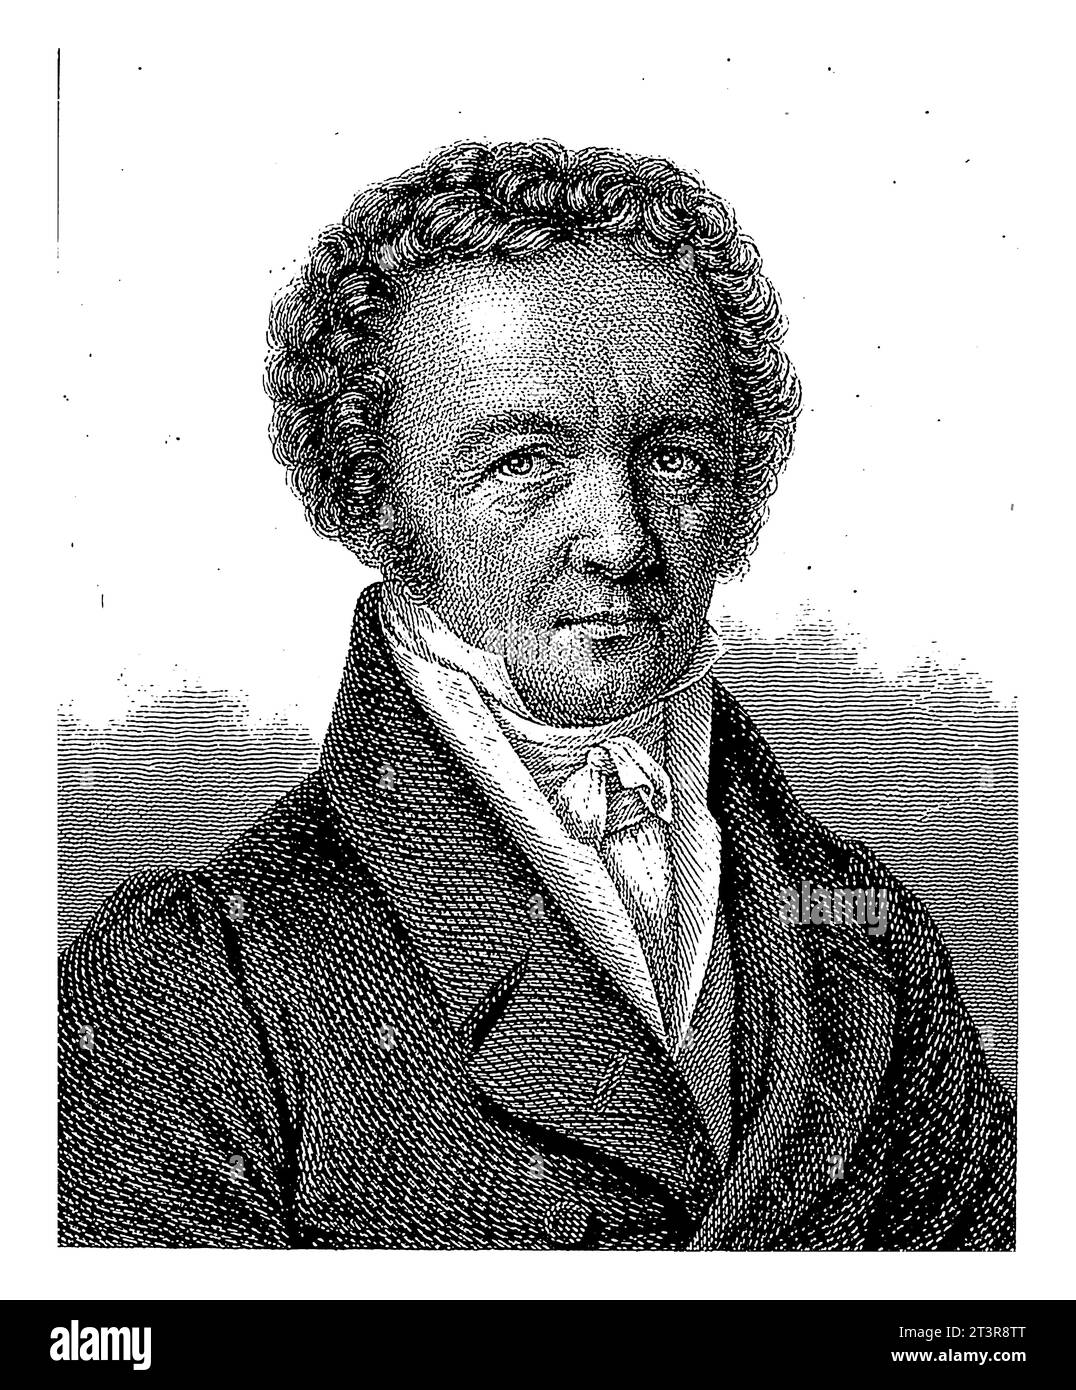 Portret van H. Schmuziger, anonymous, Friedrich Buser (possibly), c. 1800 - c. 1850, vintage engraved. Stock Photo